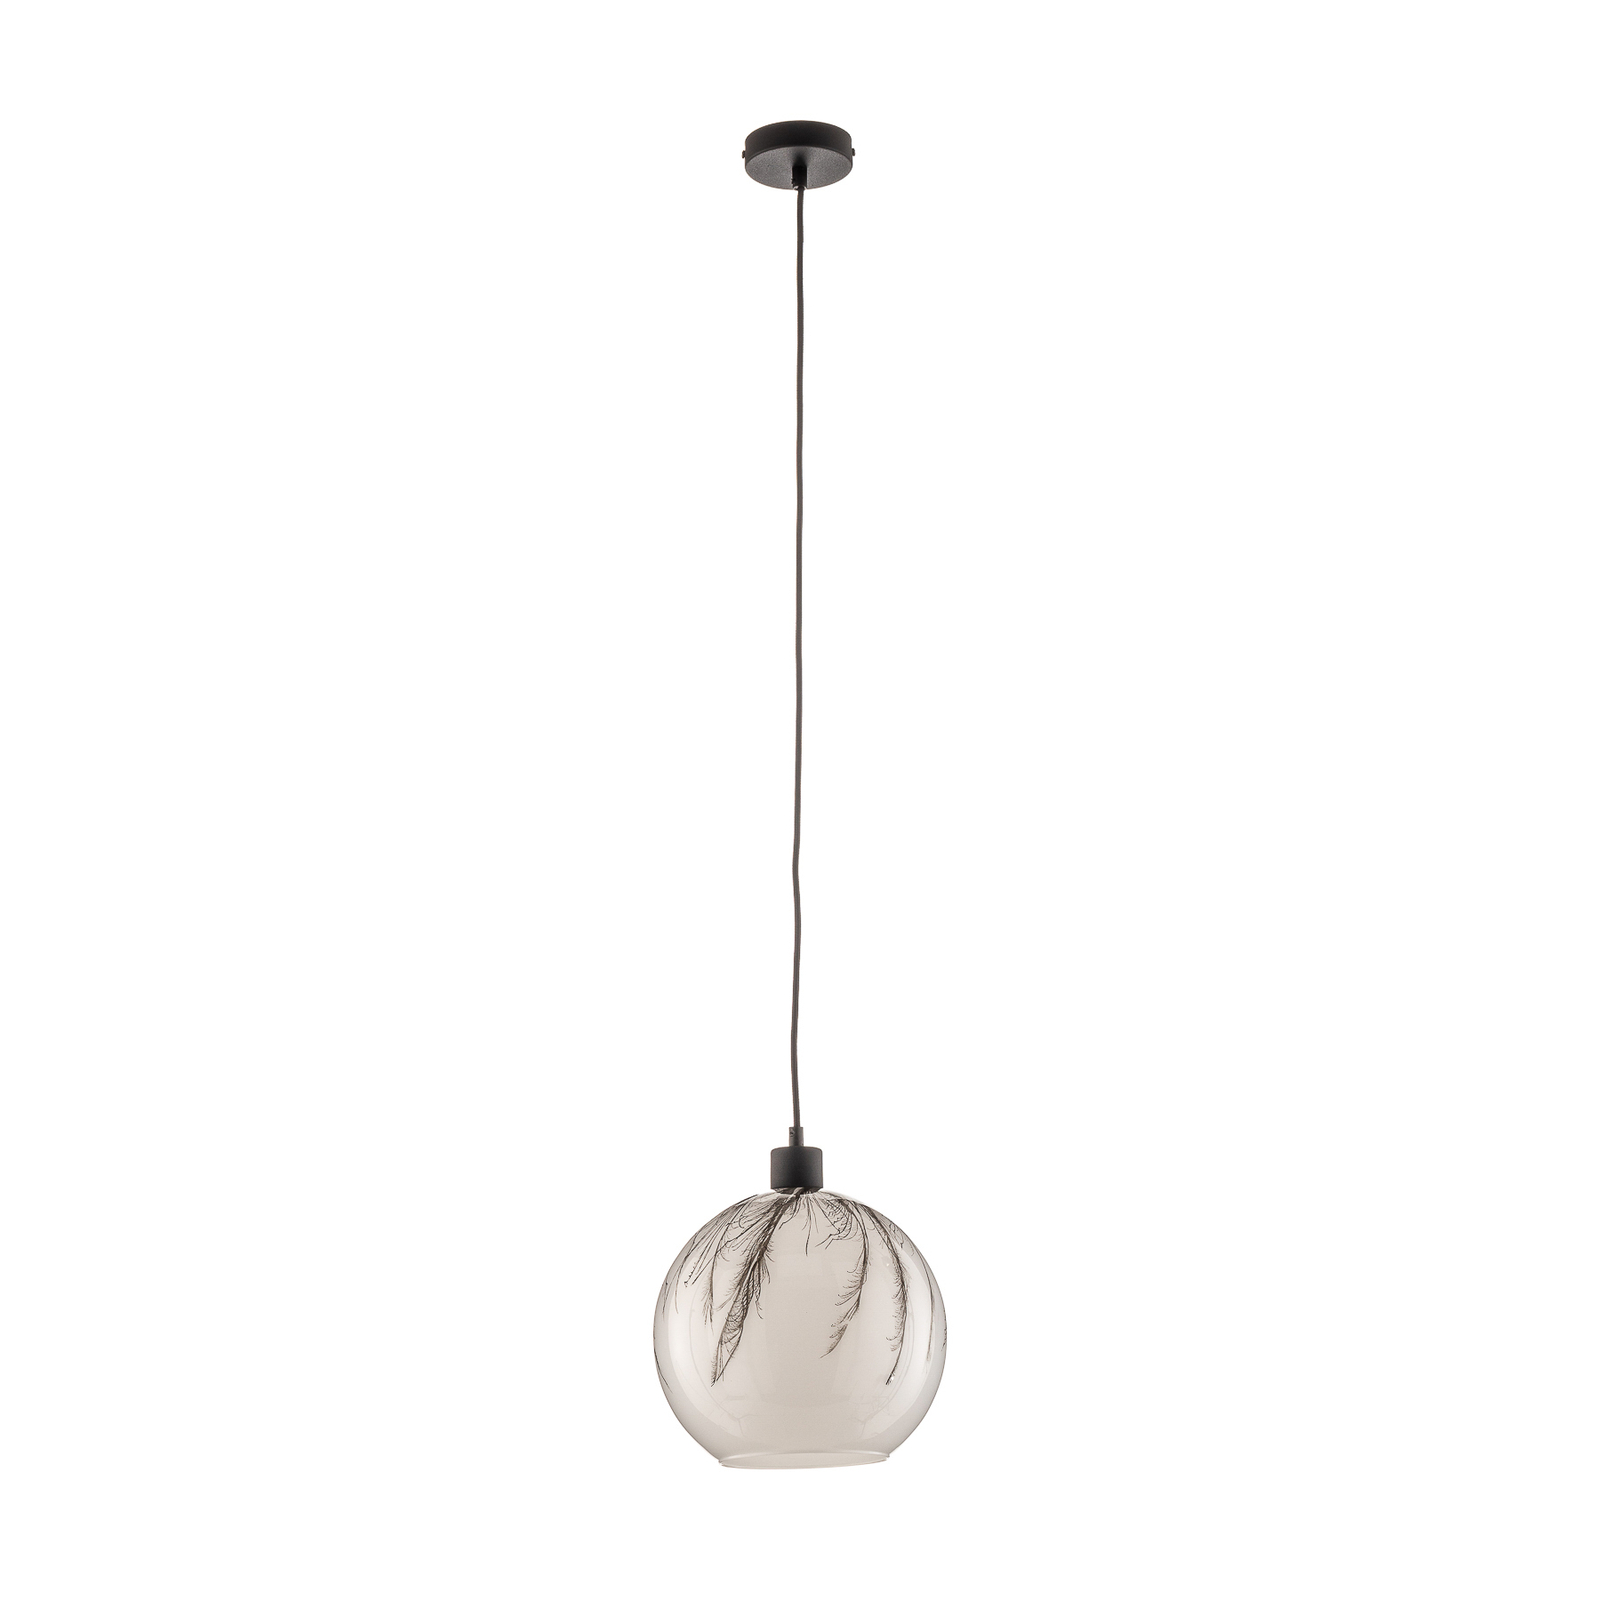 Hanglamp Ball leeuwentanddecor boven Ø 25cm